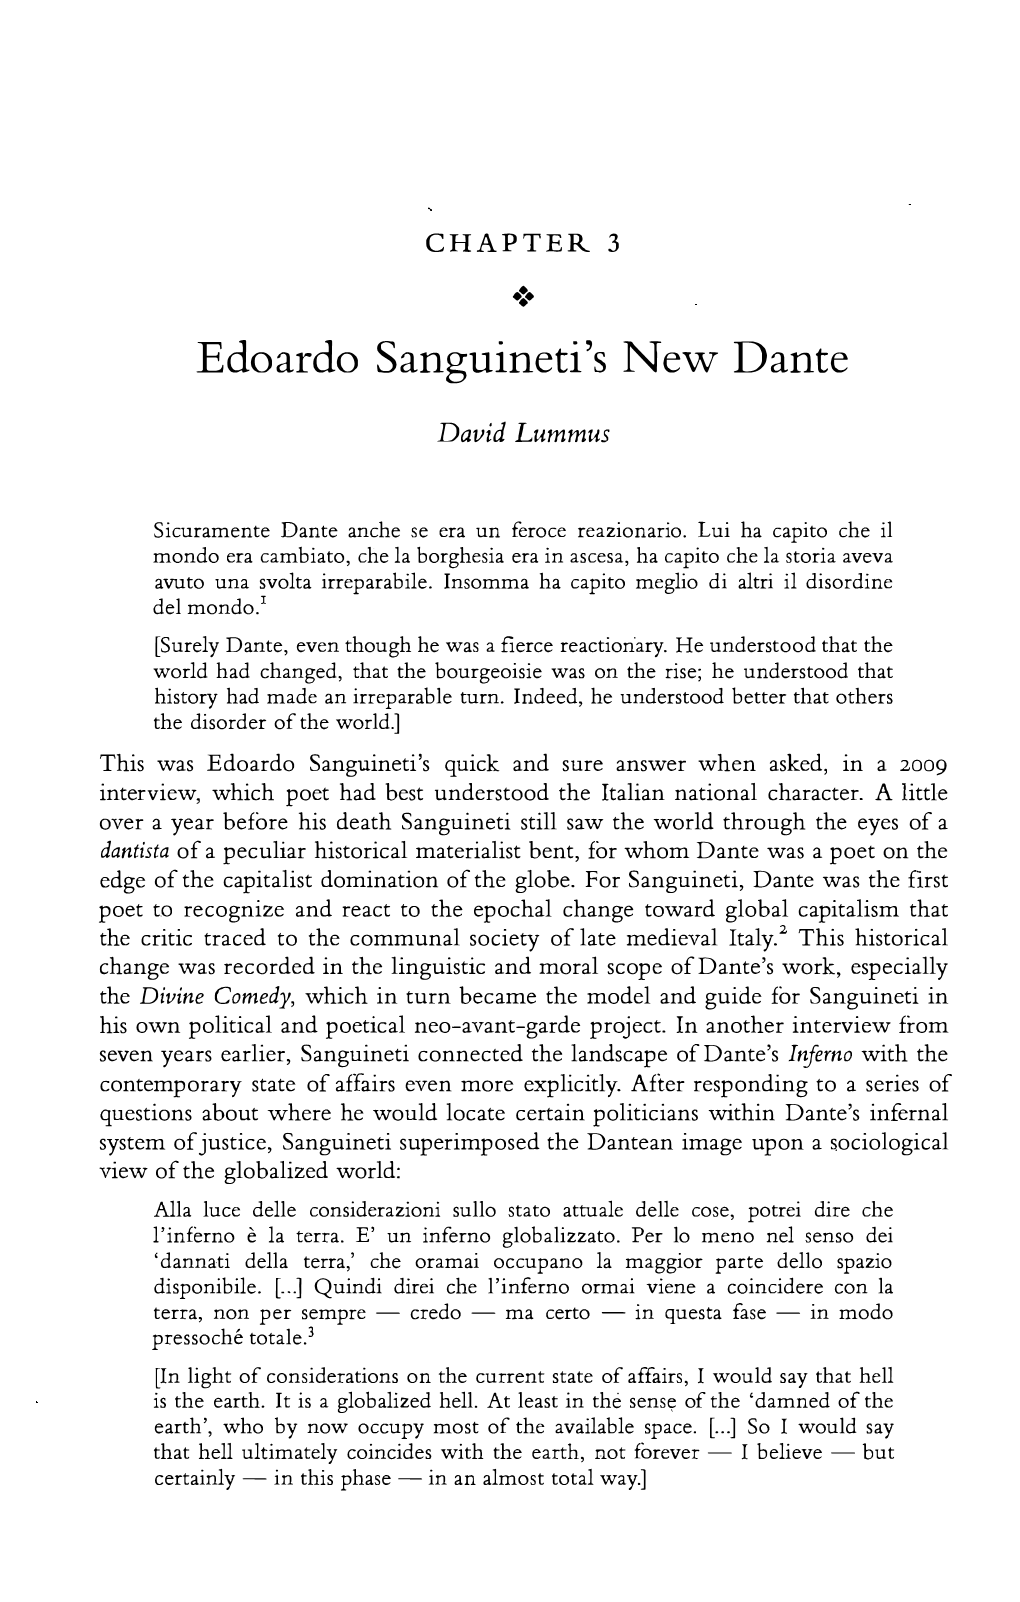 Edoardo Sanguineti's New Dante